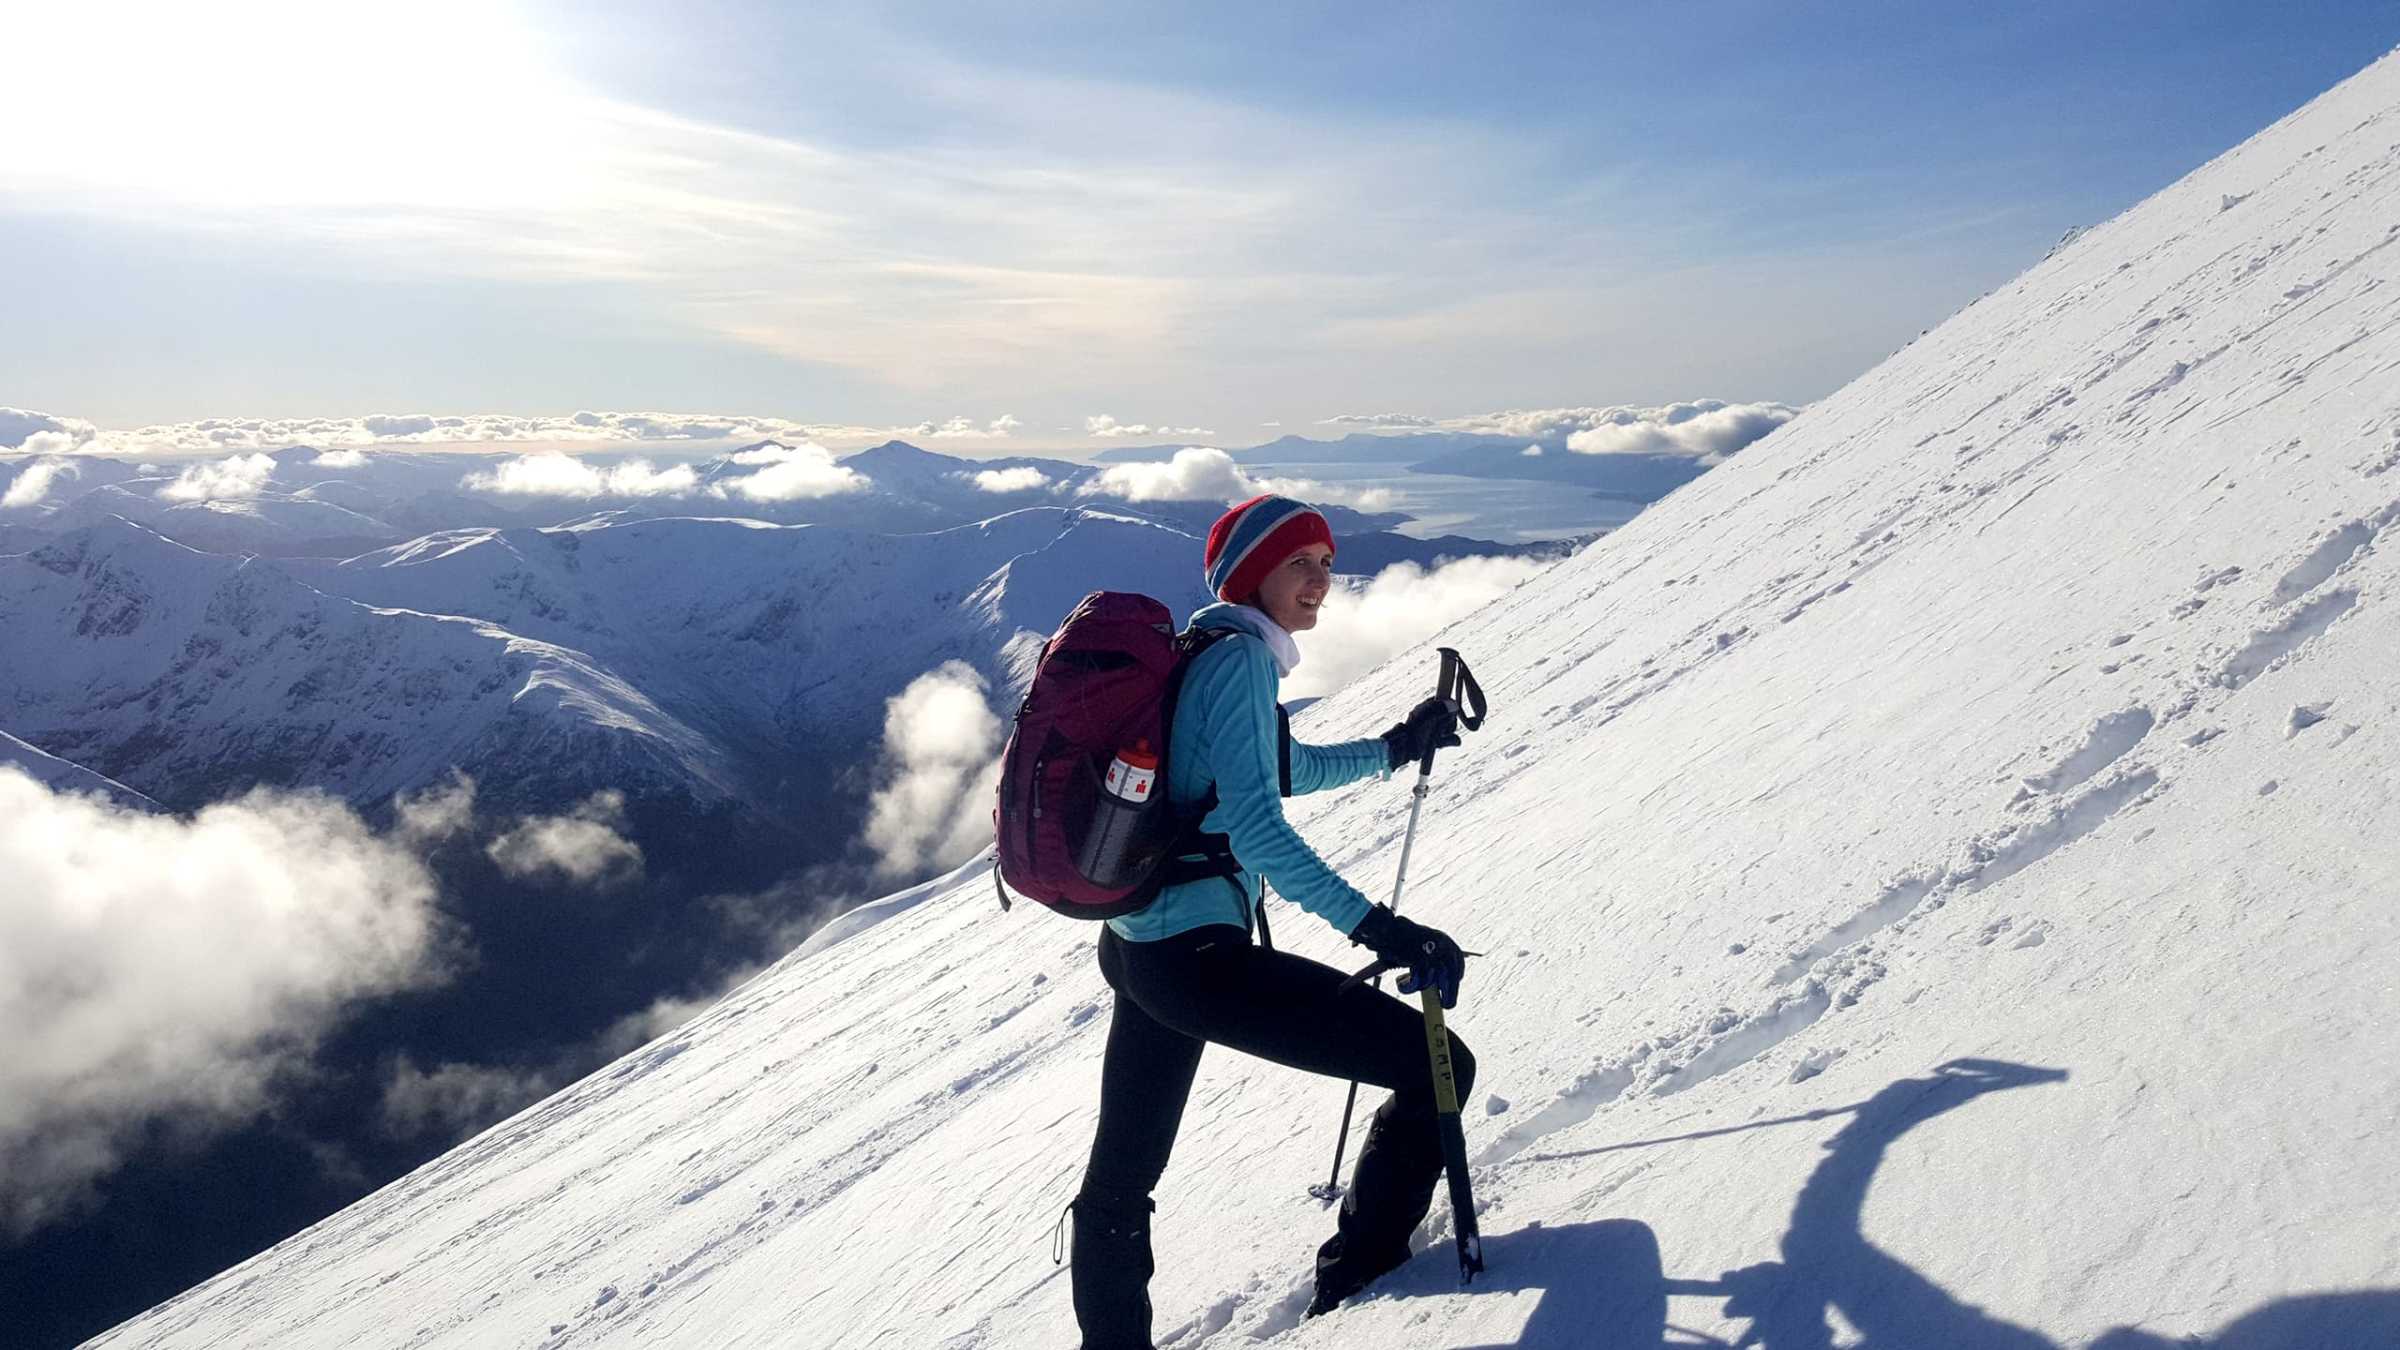 Summit Ben Nevis and Learn Winter Mountain Skills | Much Better Adventures